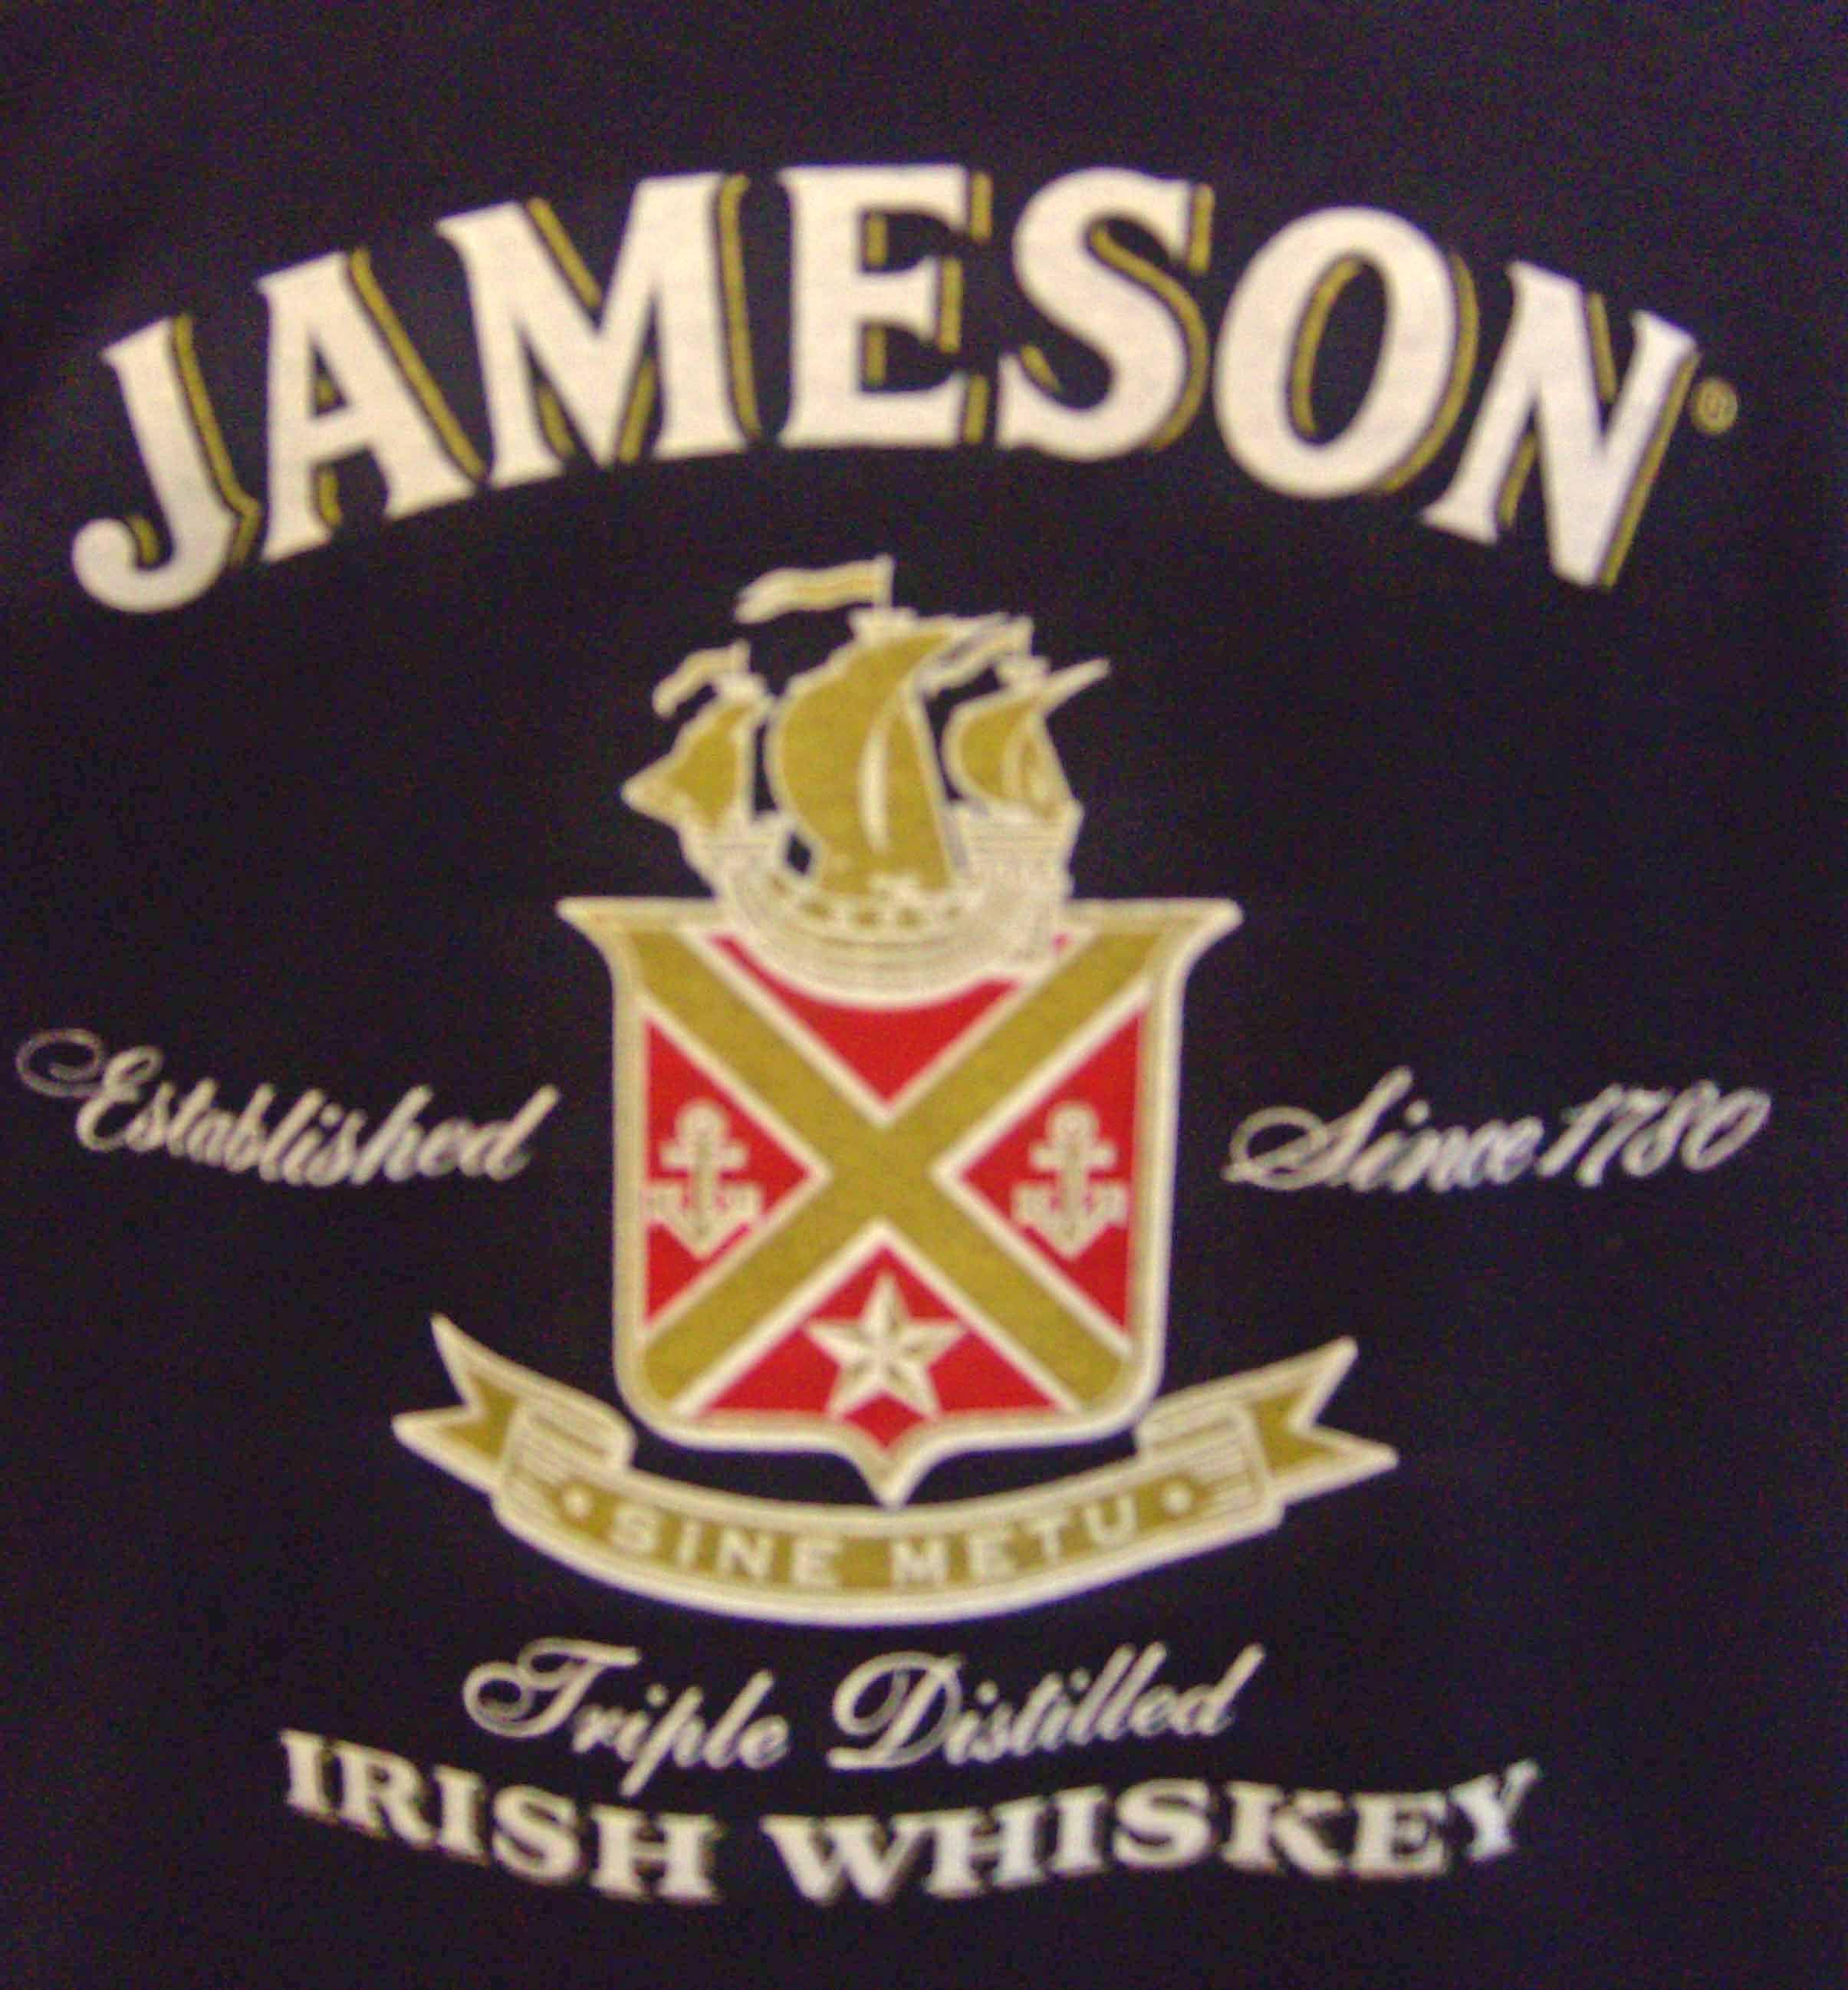 Jameson Logo - Jameson | Food, Drink, etc | Shirts, T shirt, Whisky